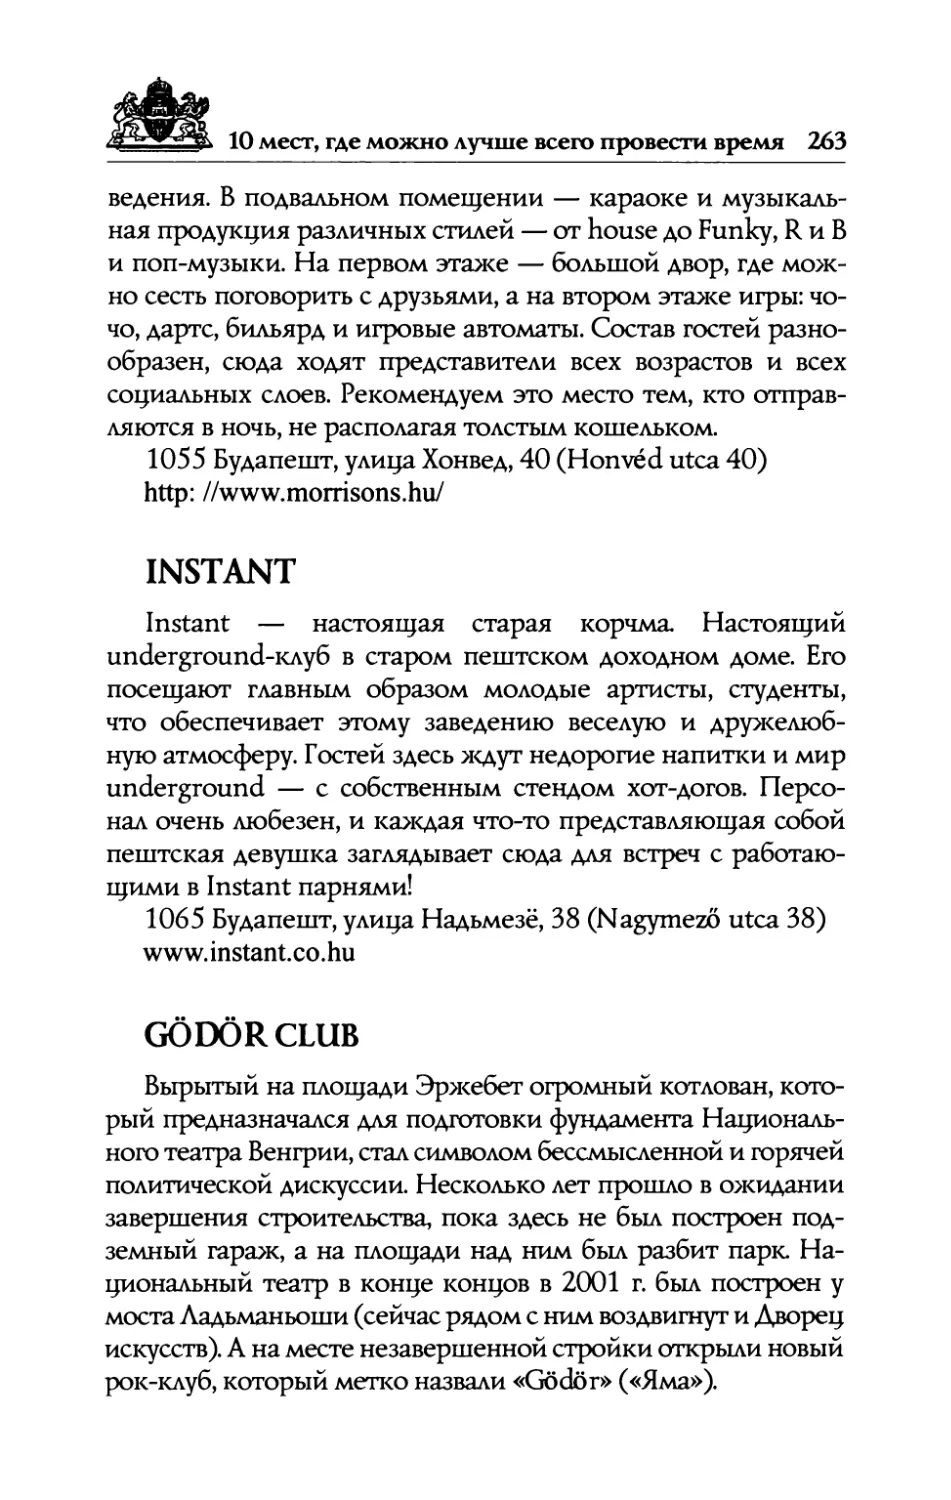 Instant
Godor  Club